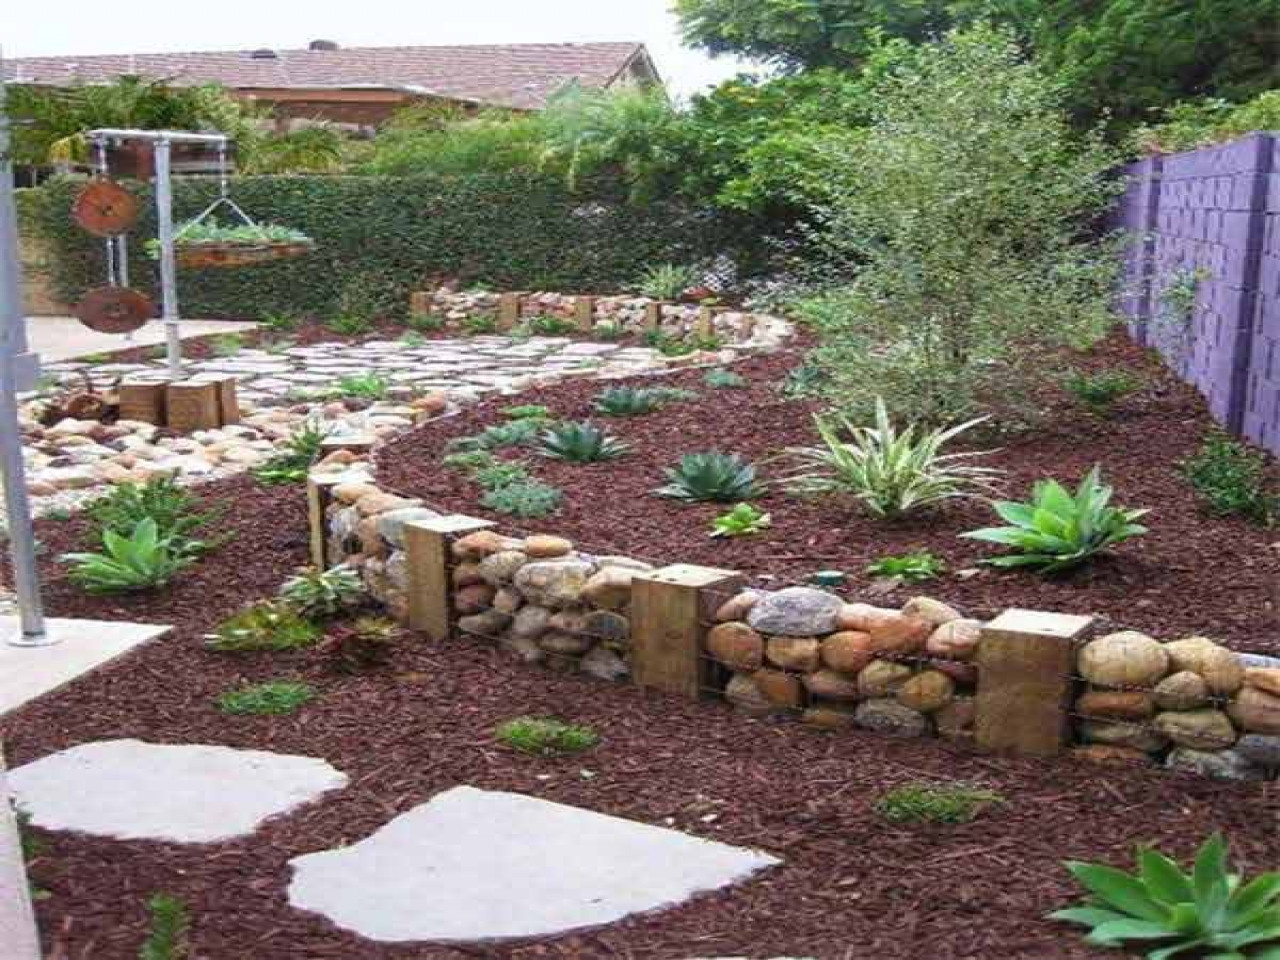 Best ideas about DIY Retaining Wall Ideas
. Save or Pin Outdoor garden wall decor diy garden retaining walls Now.